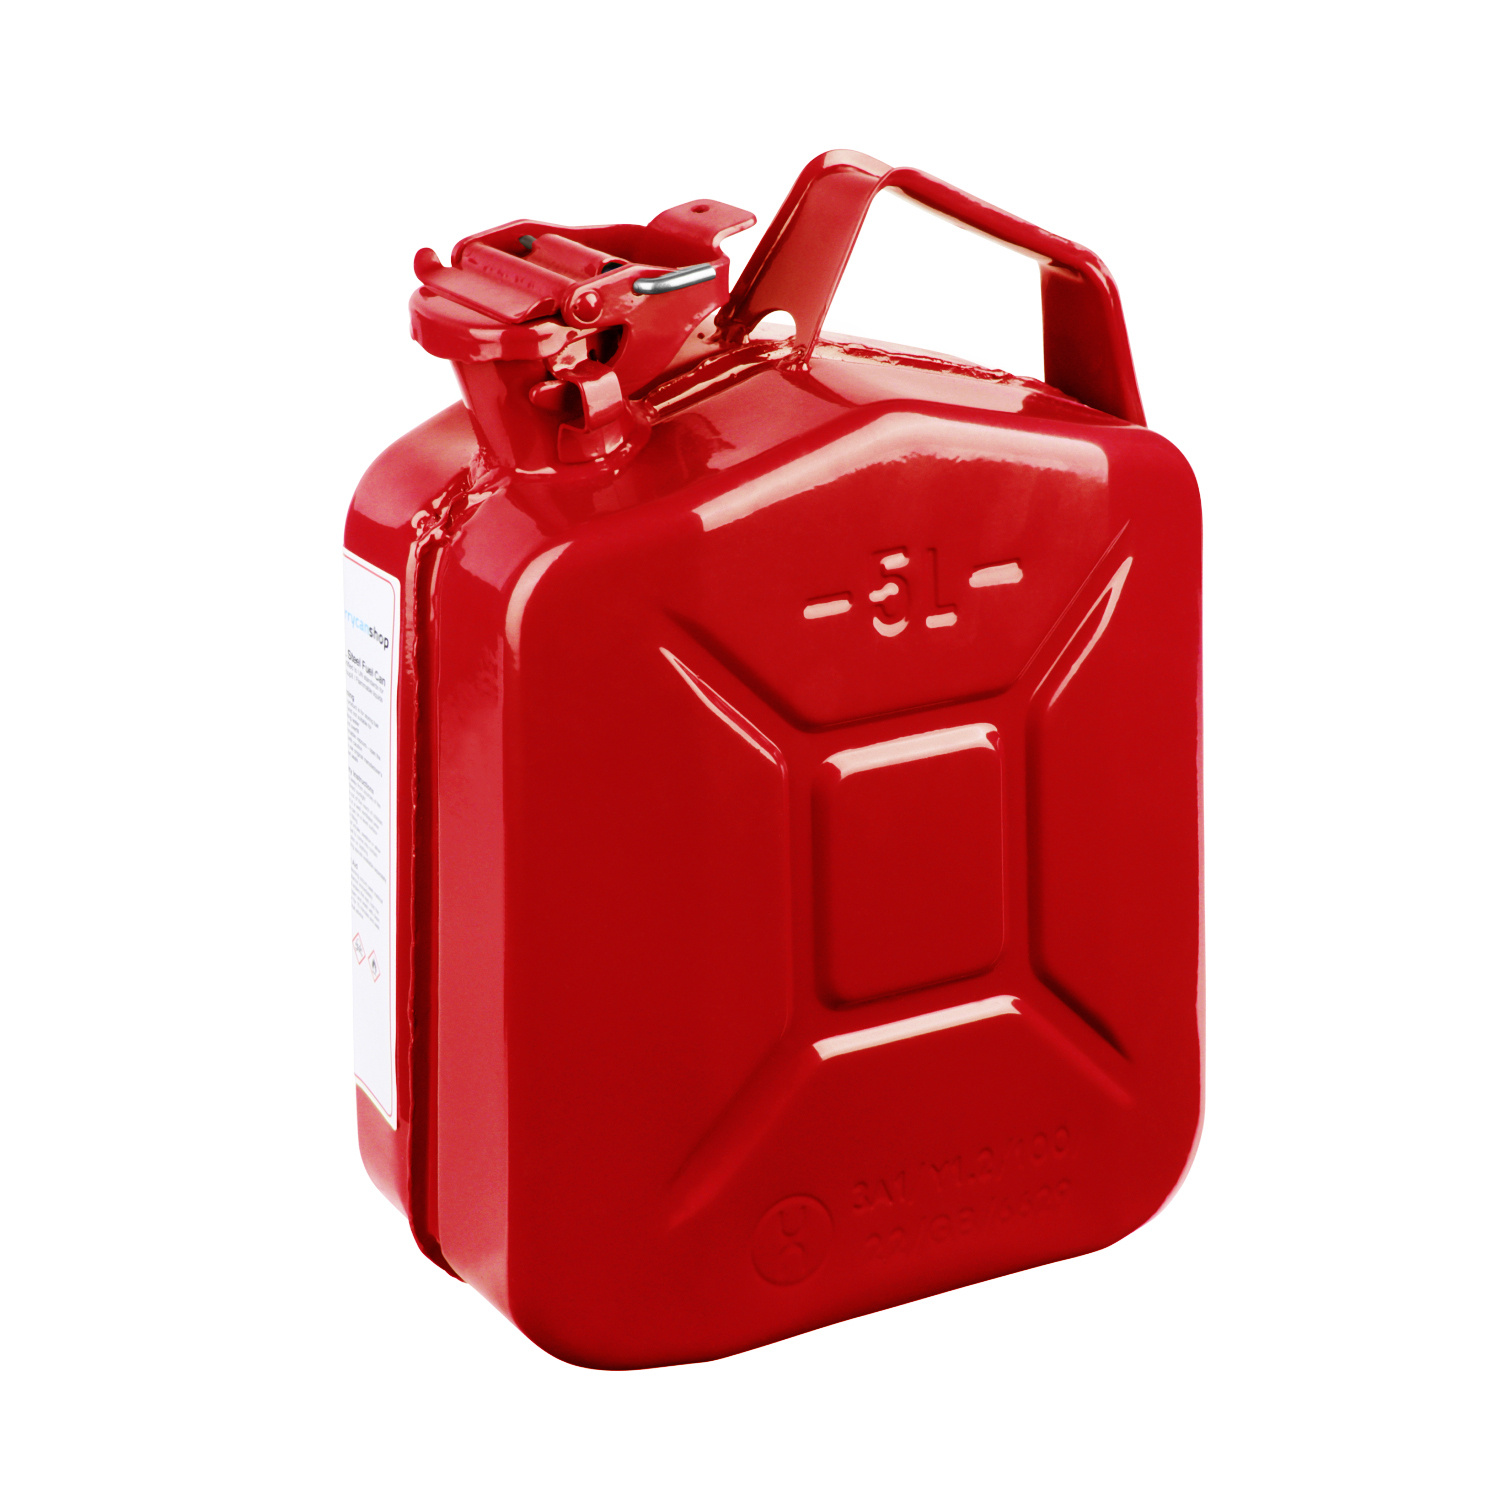 5 liter steel fuel jerrycan - red 